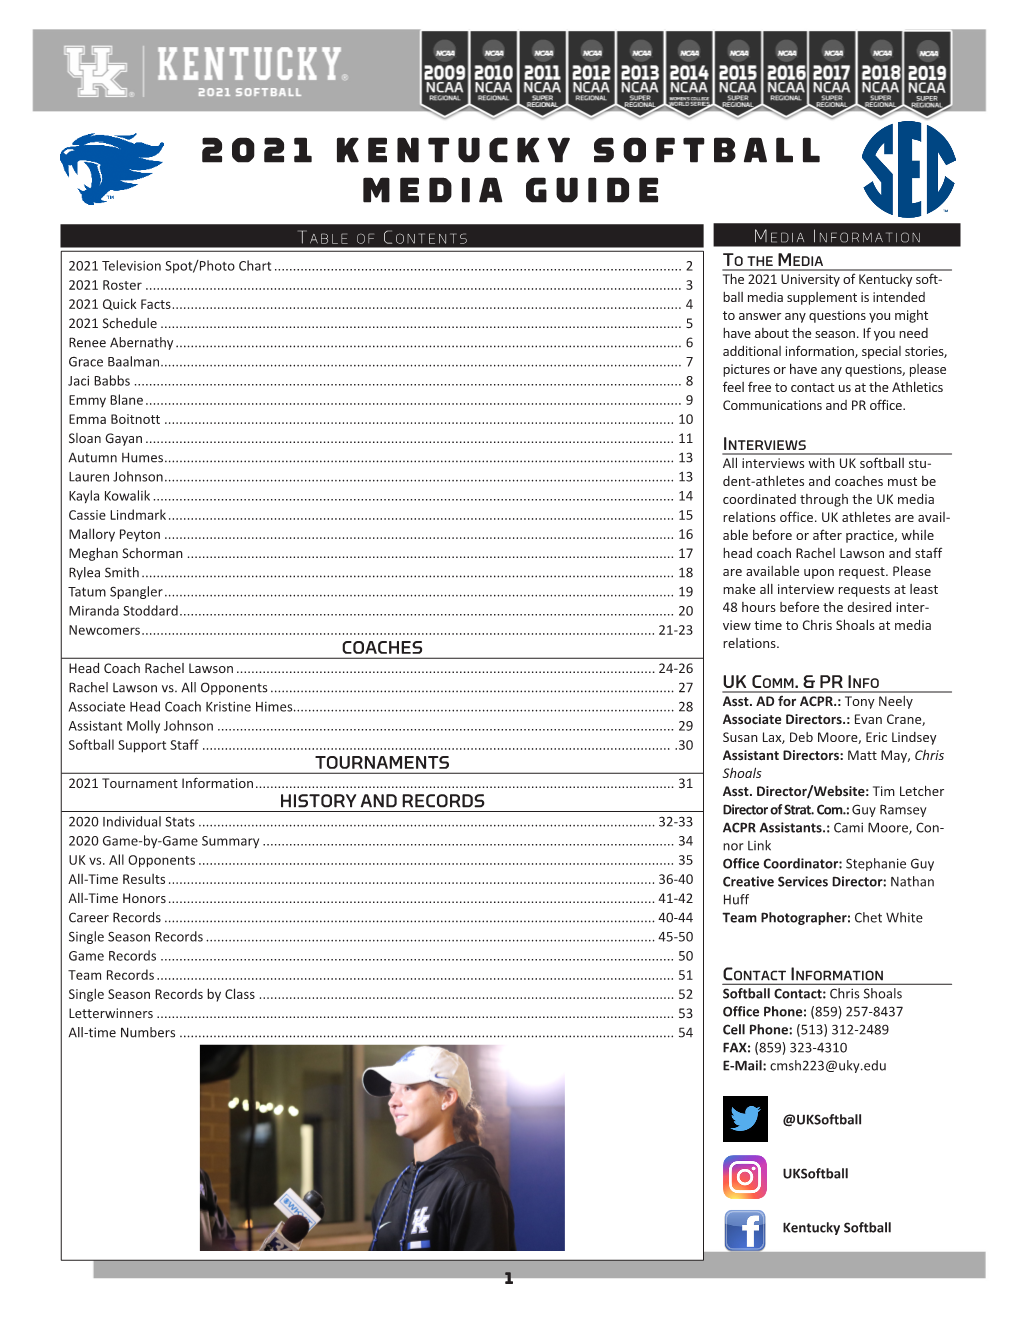 2021 Kentucky Softball Media Guide